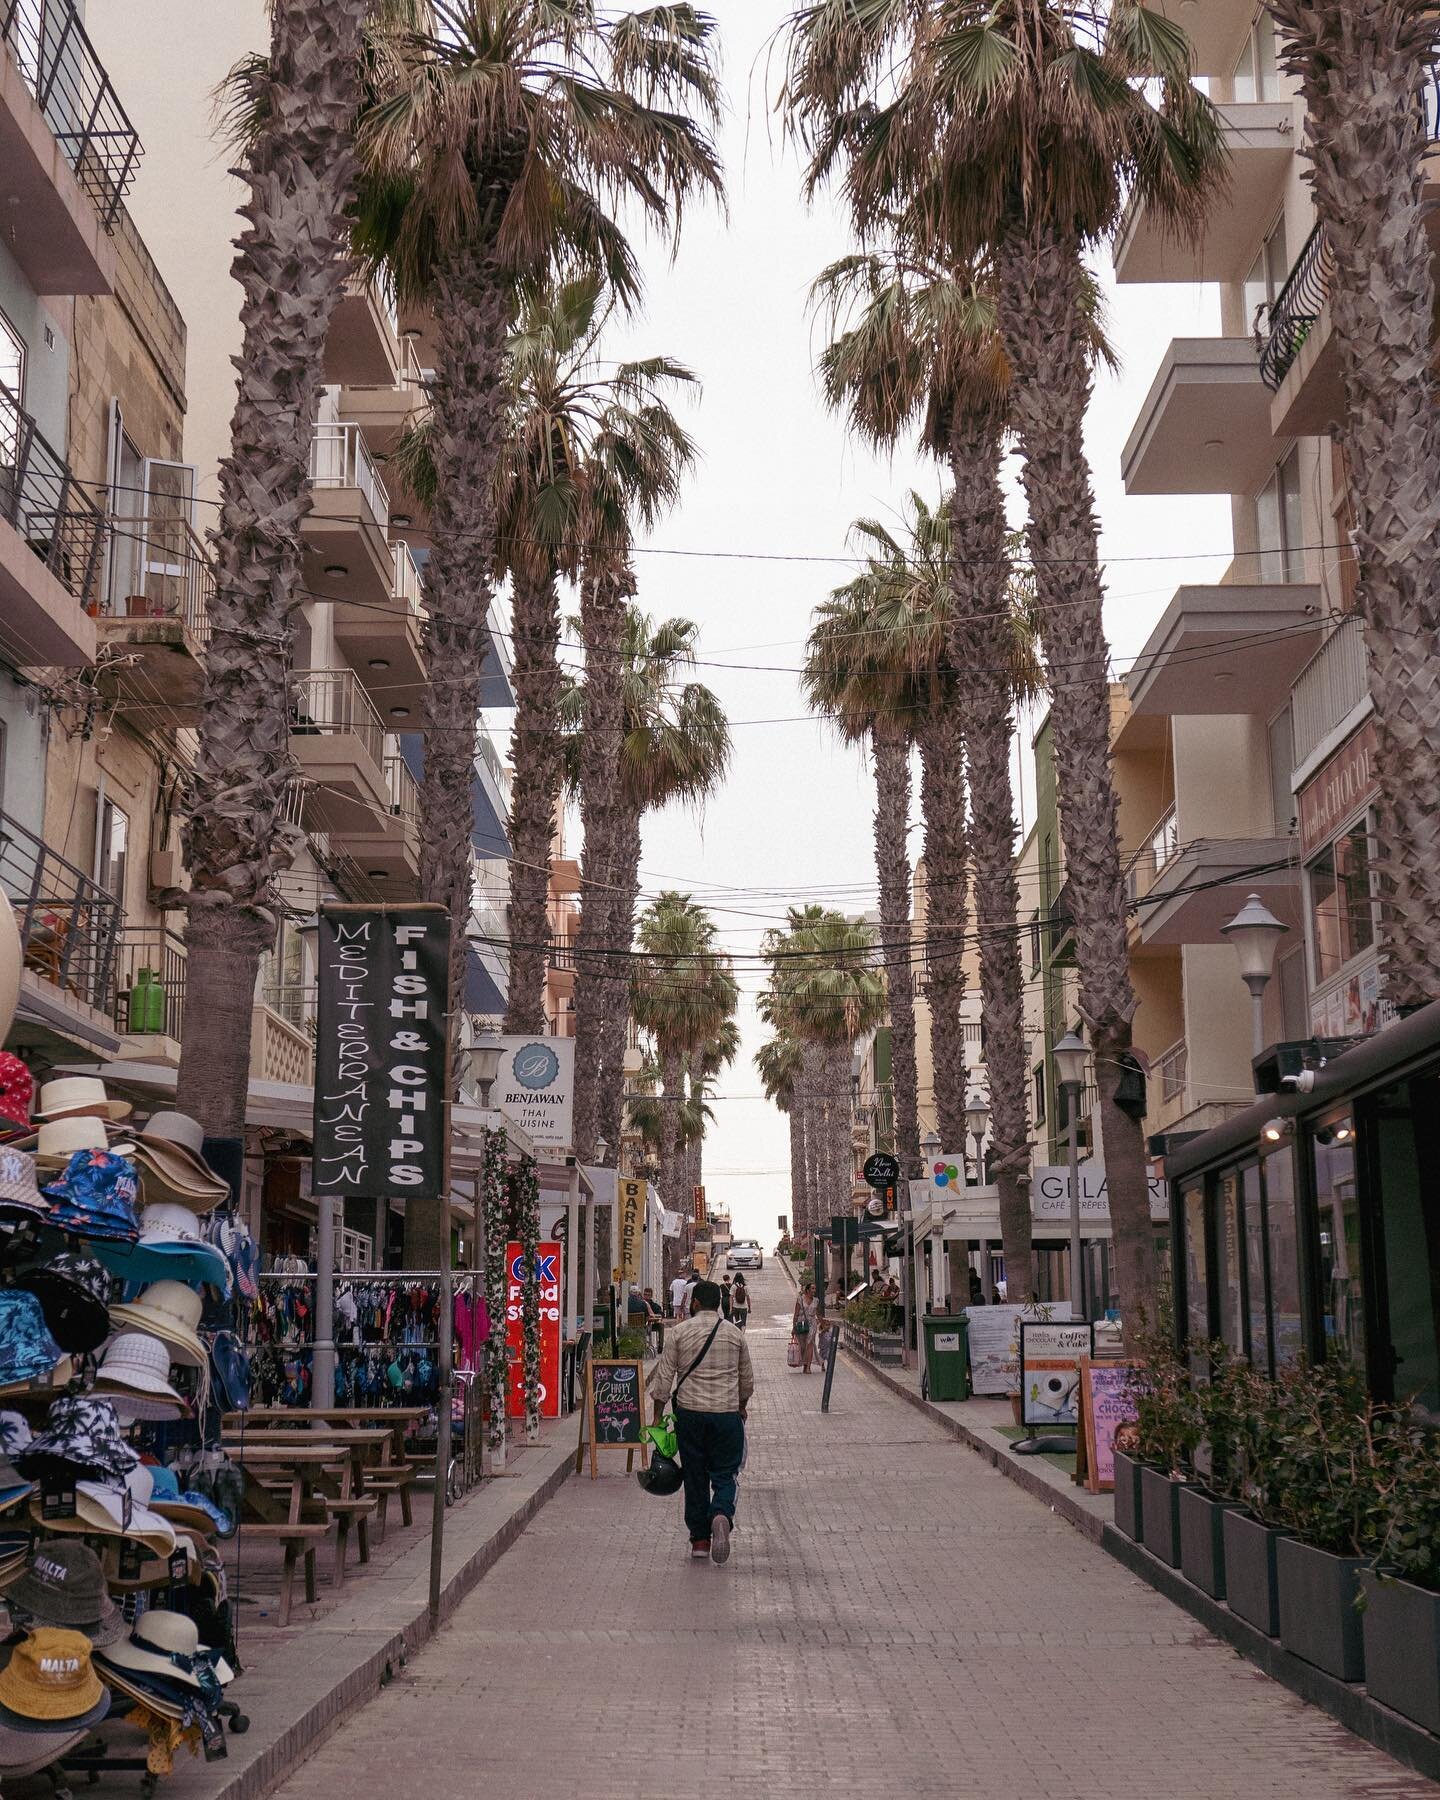 The streets of Malta